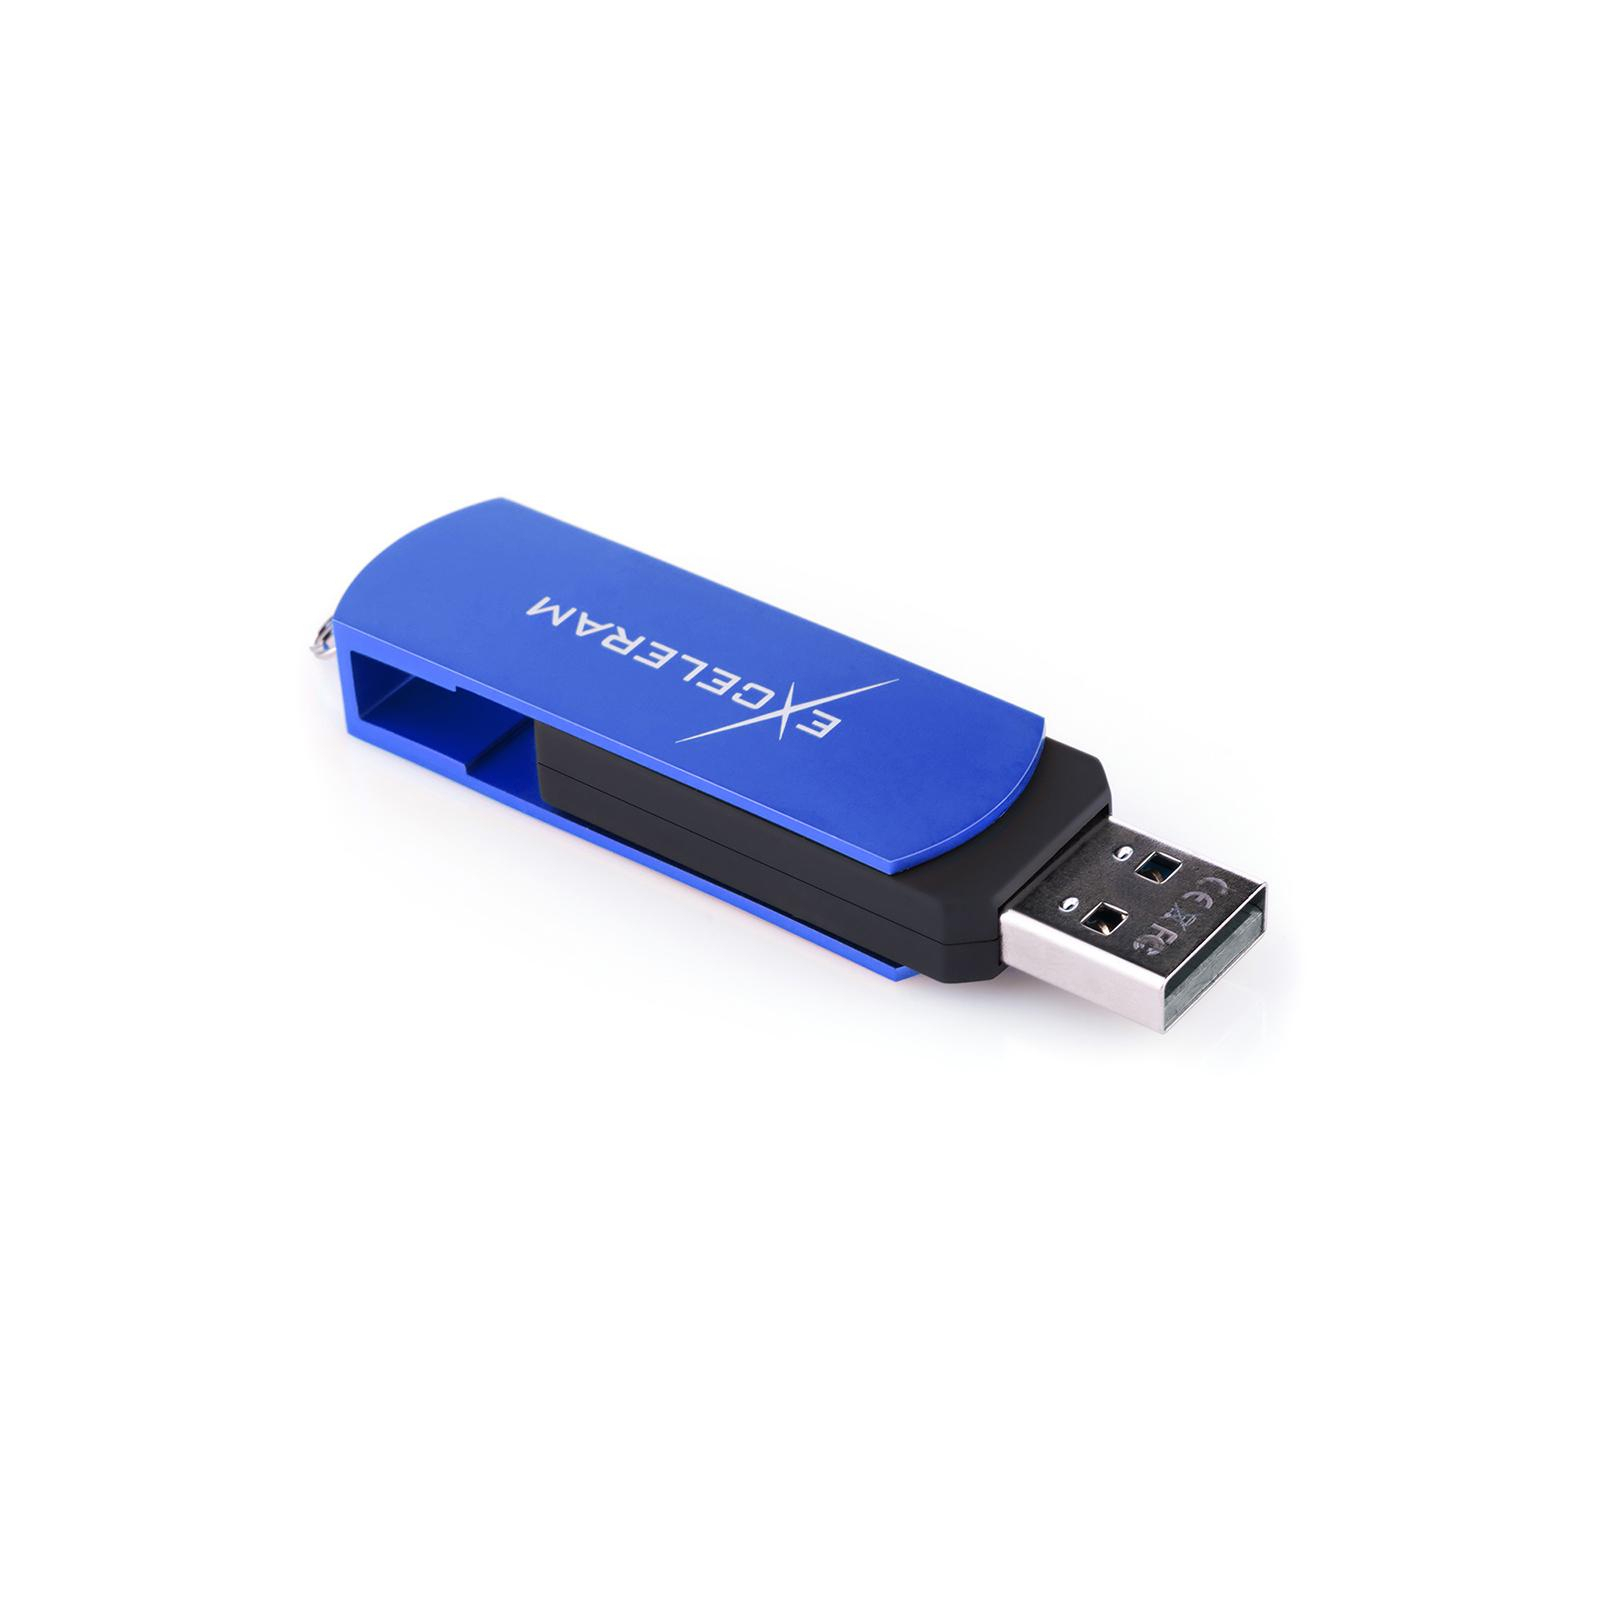 USB флеш накопитель eXceleram 16GB P2 Series Yellow2/Black USB 2.0 (EXP2U2Y2B16) изображение 5